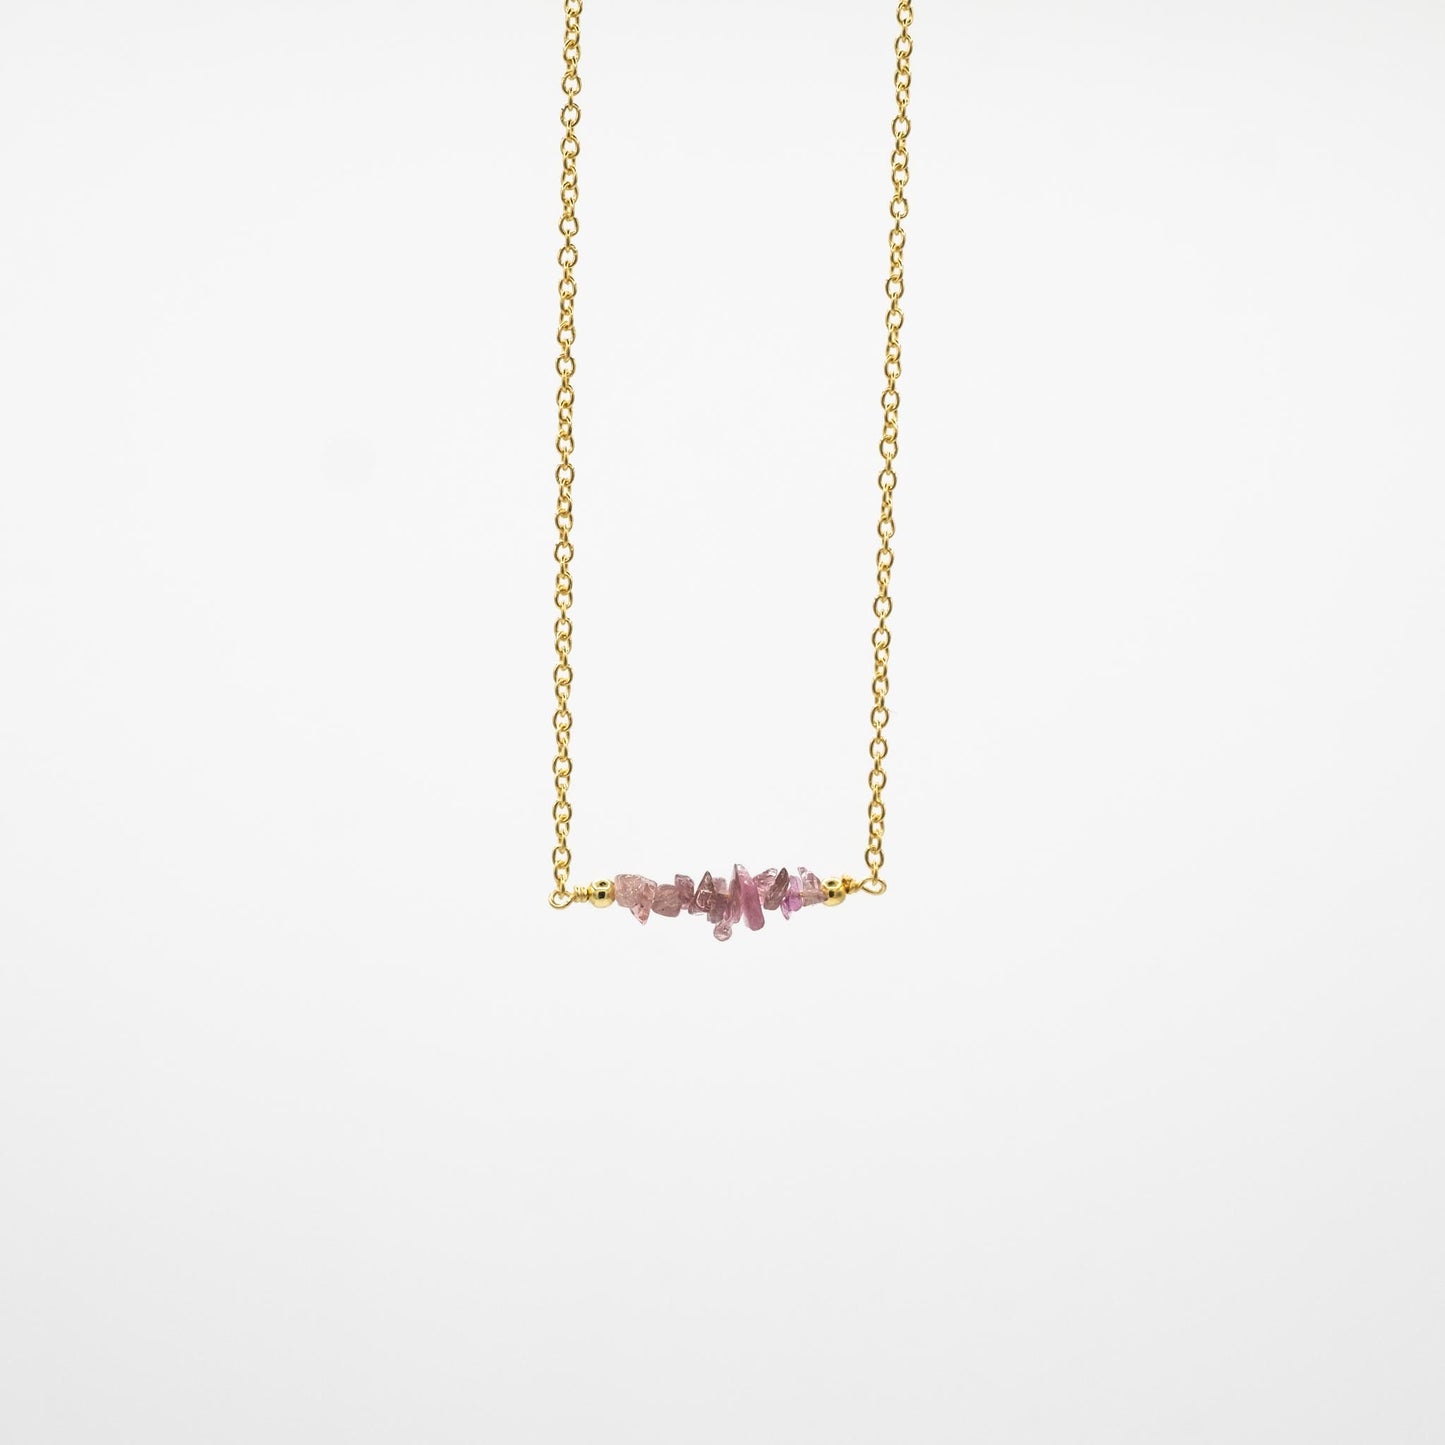 collier or vermeil pierre semi précieuse tourmaline bijoux femme joaillerie bijouterie paris